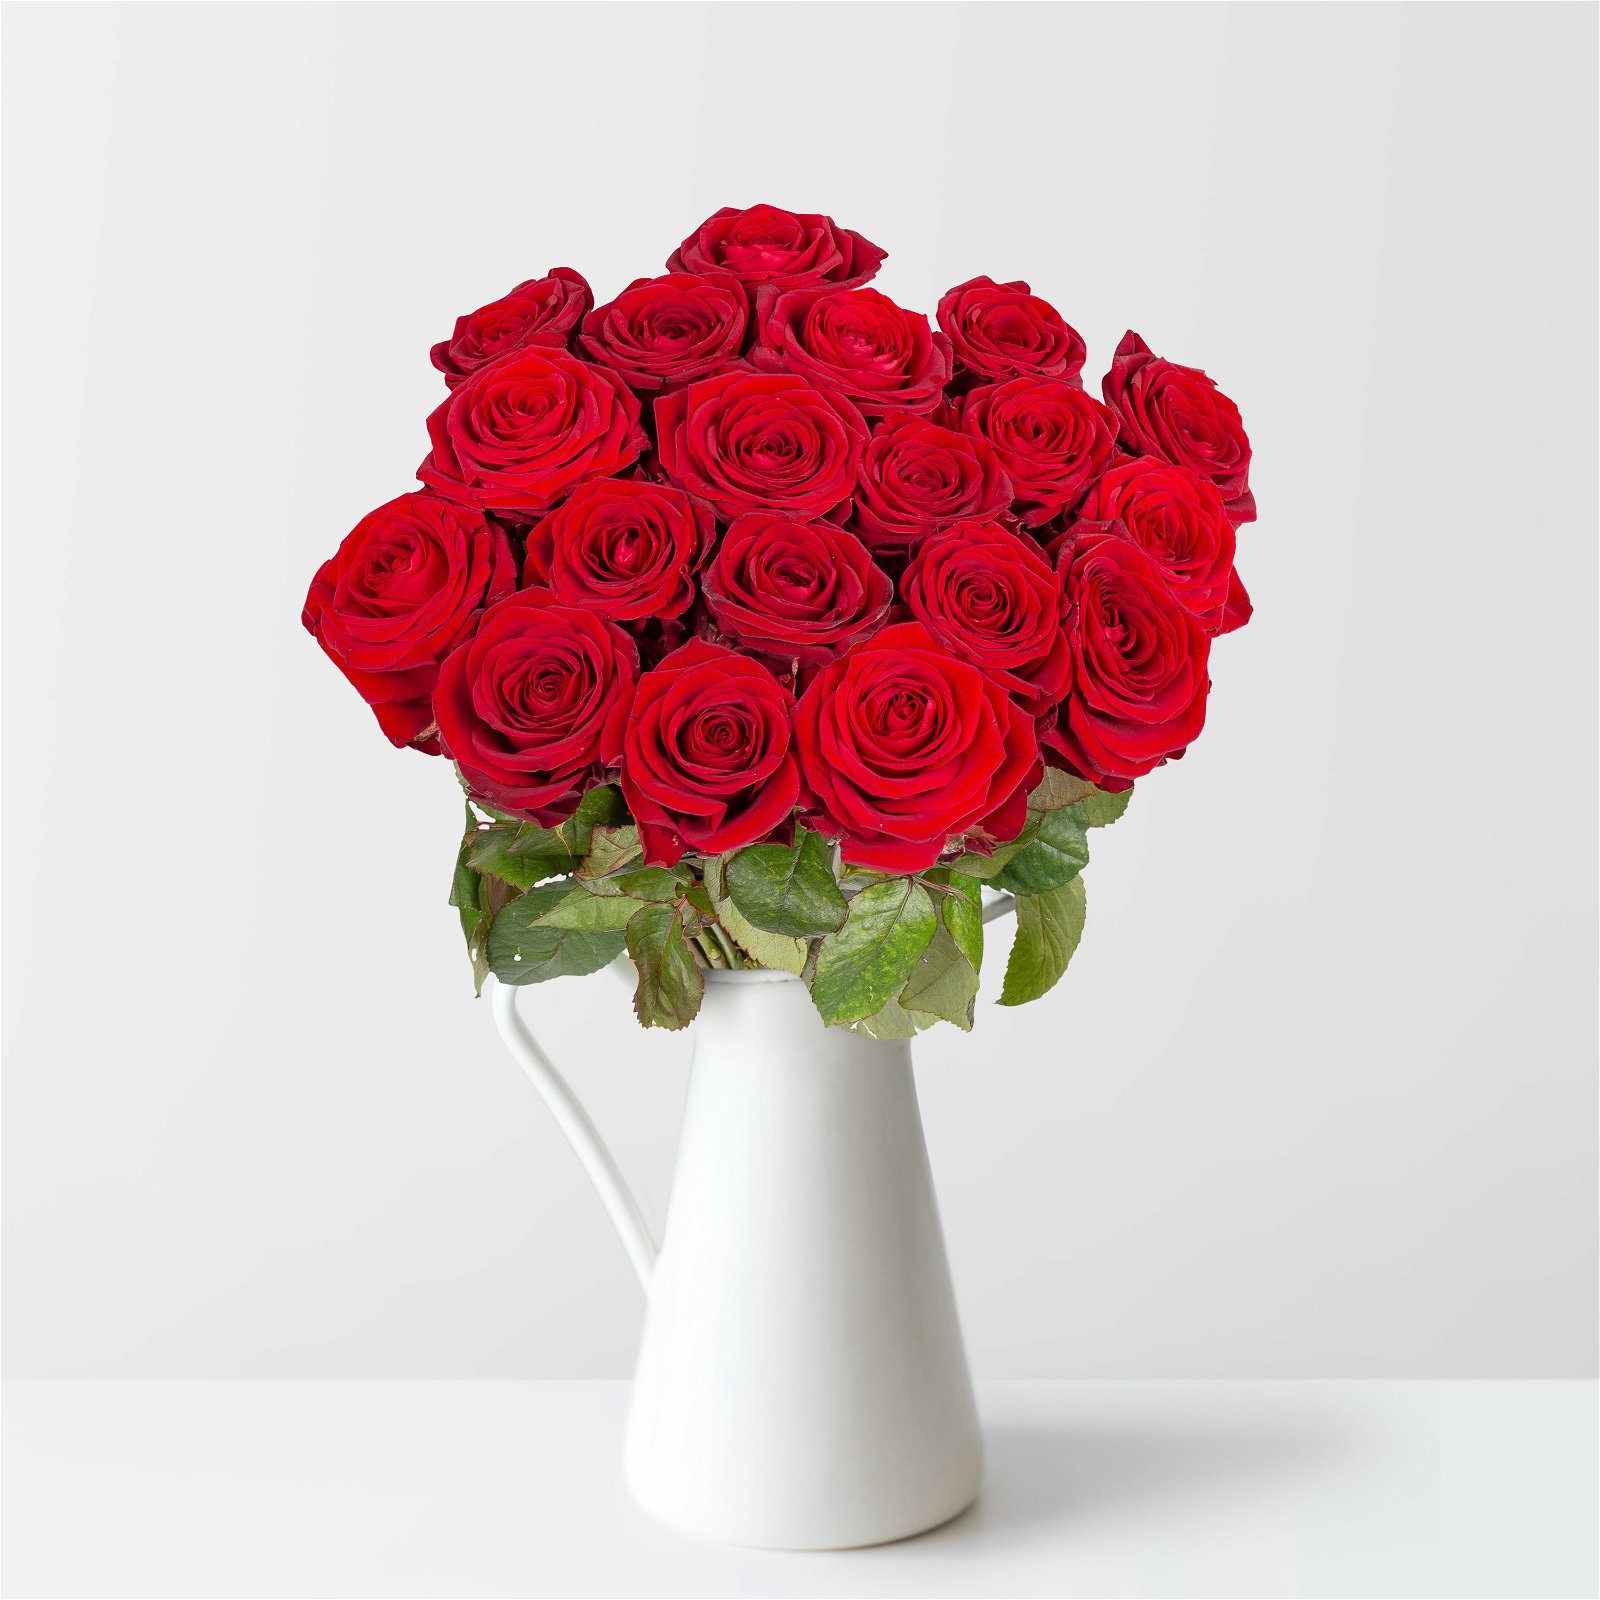 Blumenbund mit Rosen 'Red Naomi', 25er-Bund, rot, inkl. gratis Grußkarte